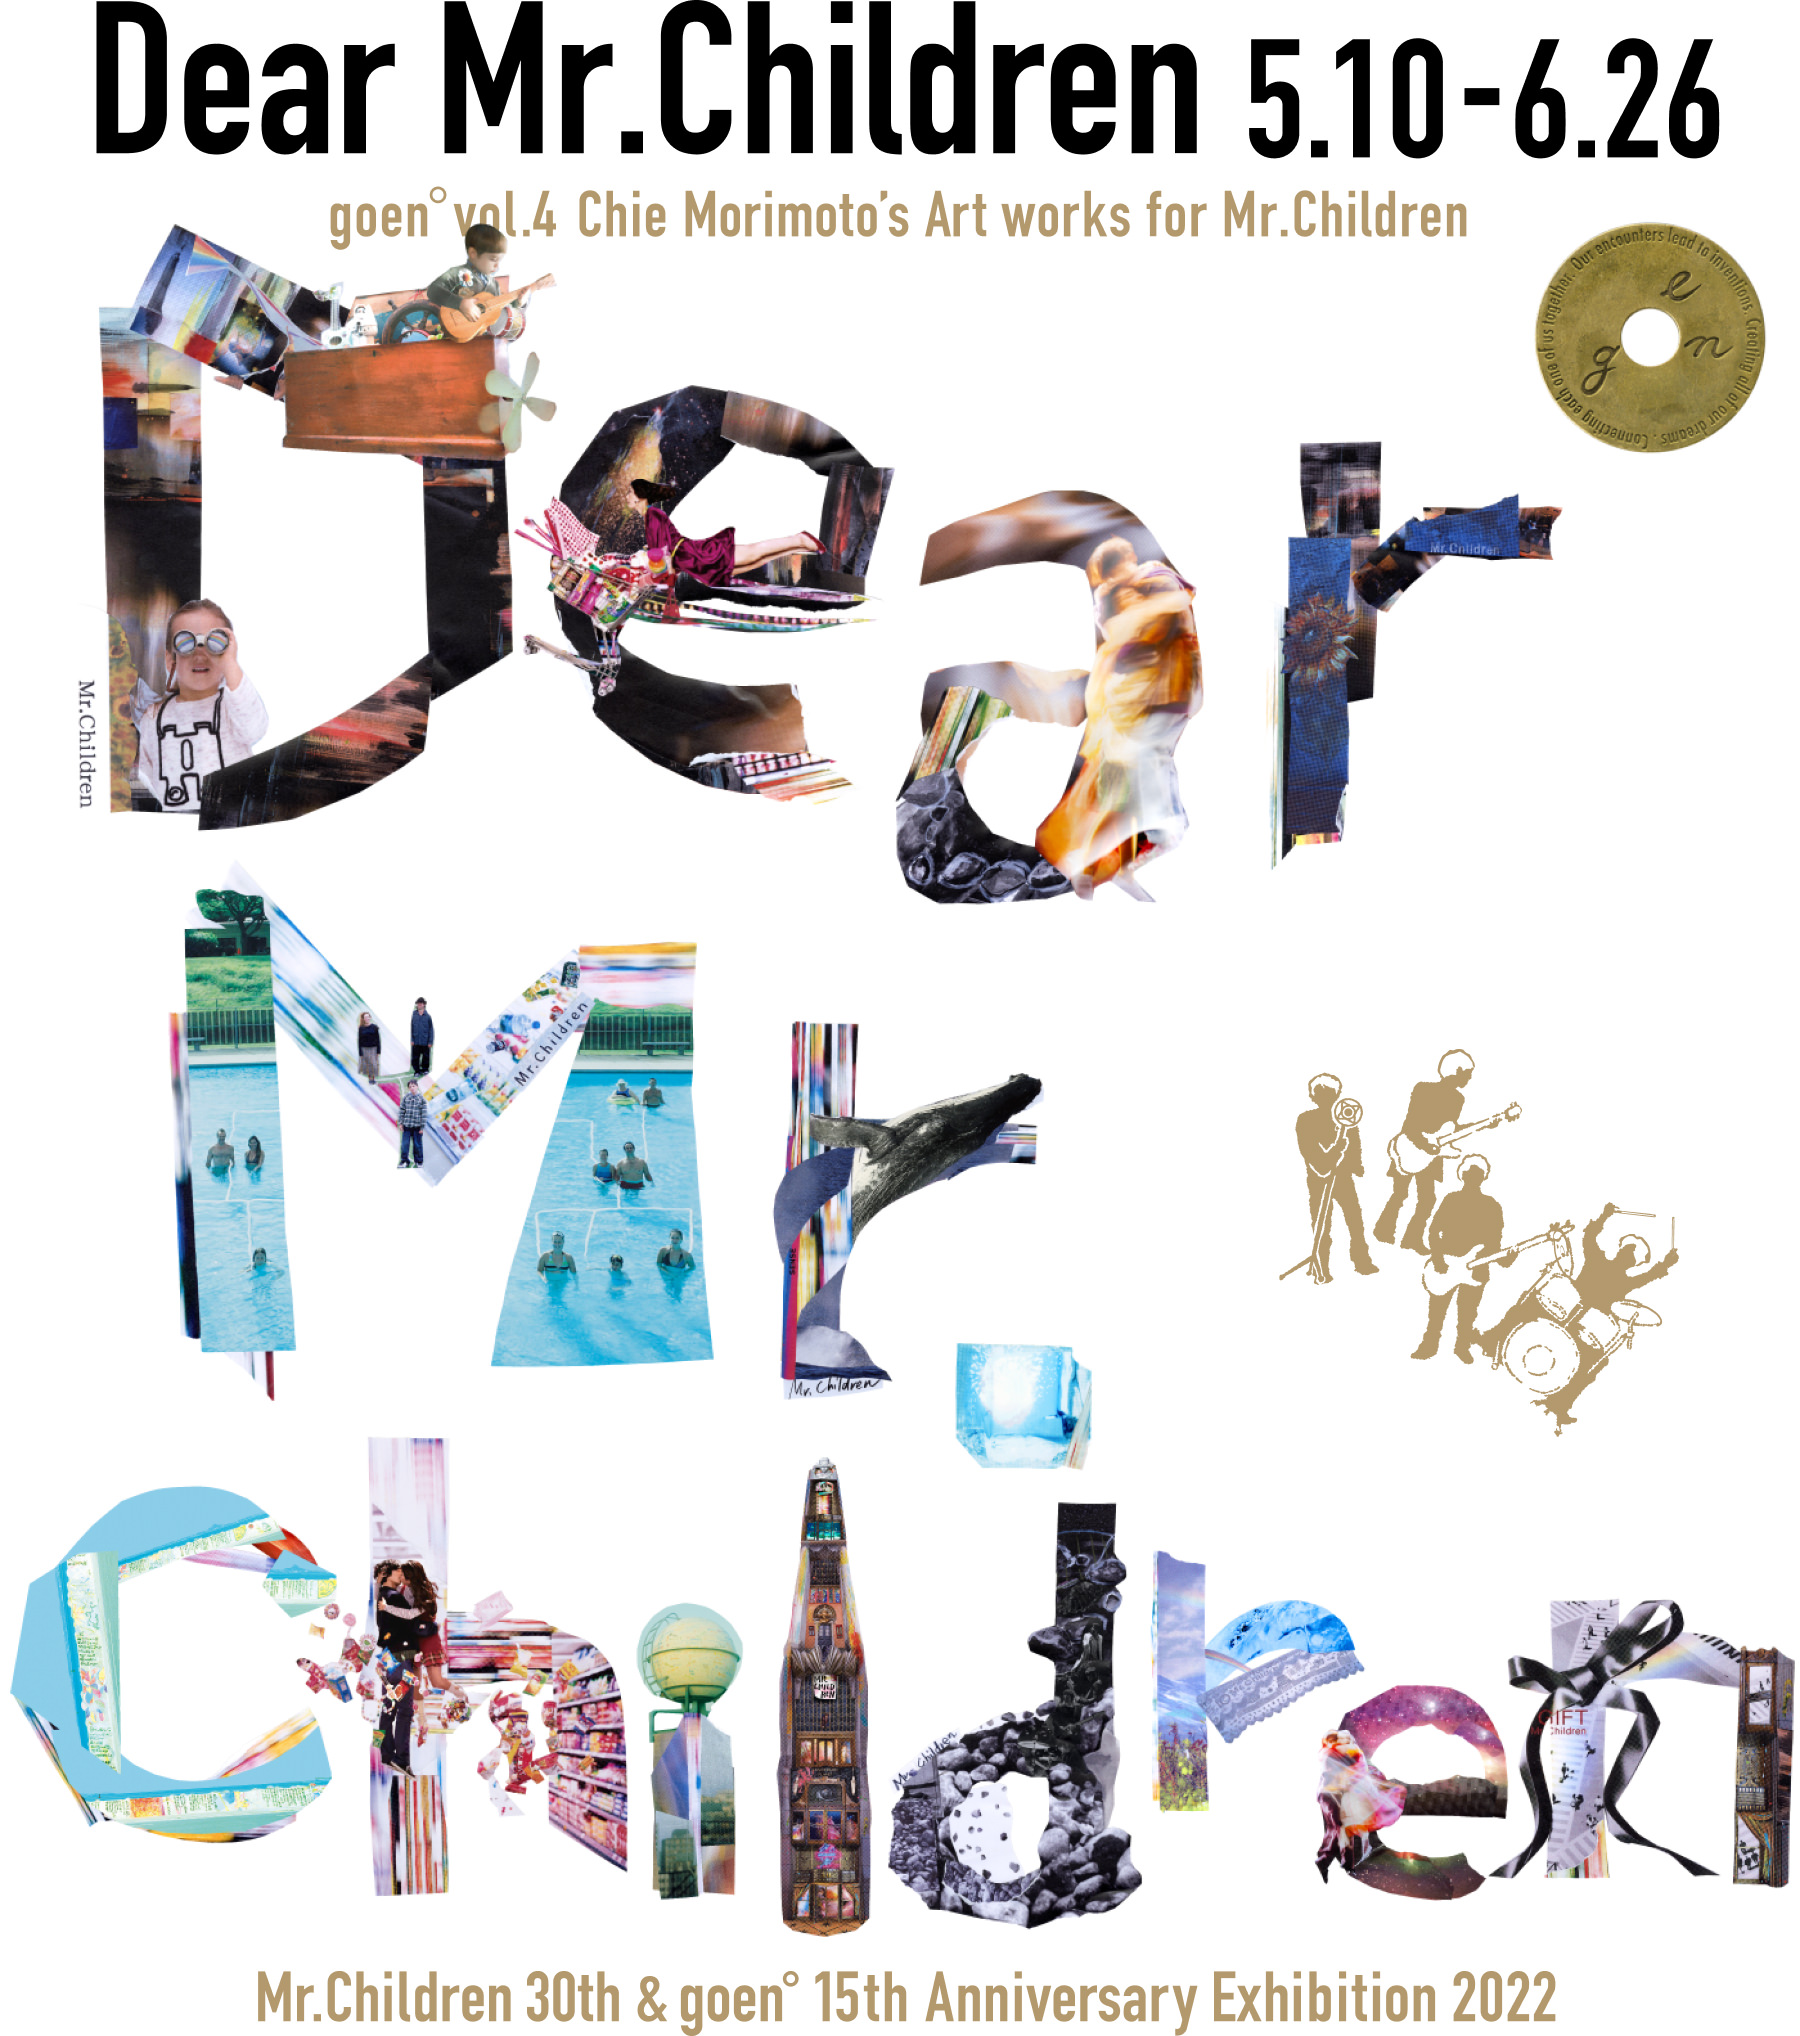 Dear Mr.Children 5.10-6.26 | goen° vol.4 Chie Morimoto's Art works 